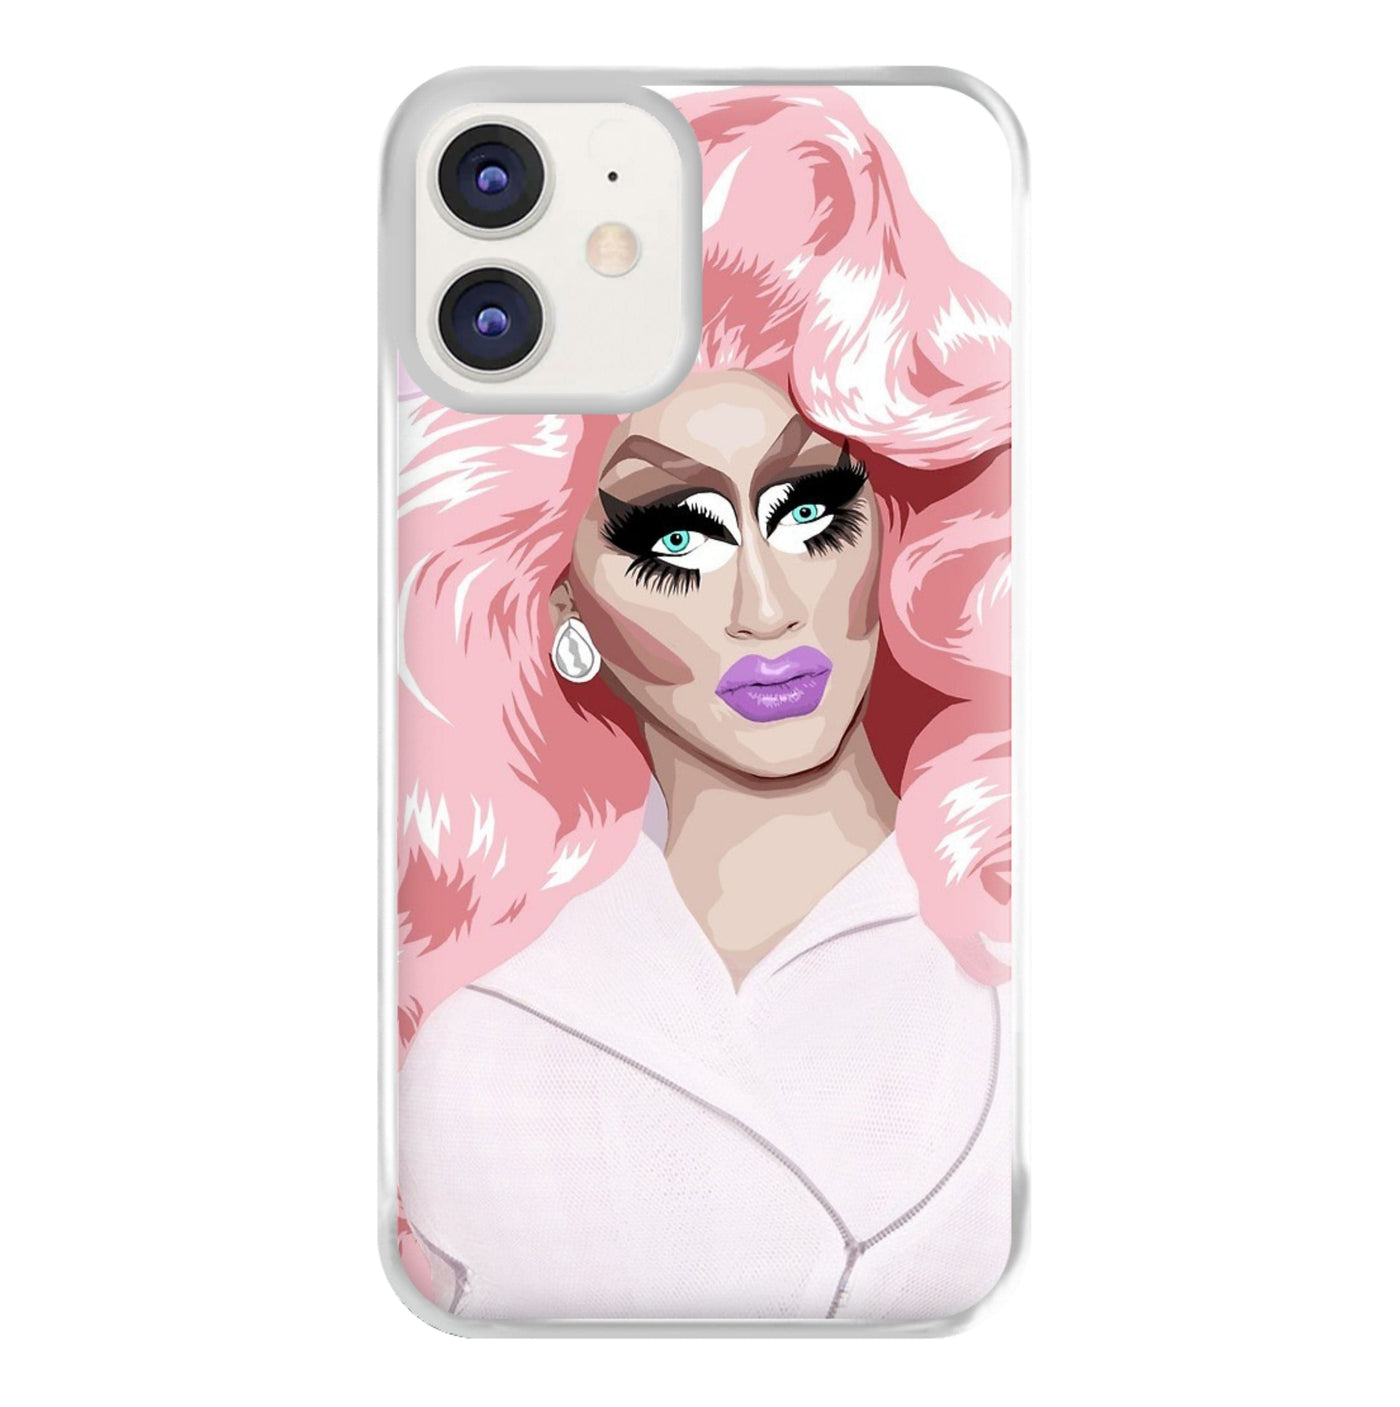 White Trixie Mattel - RuPaul's Drag Race Phone Case